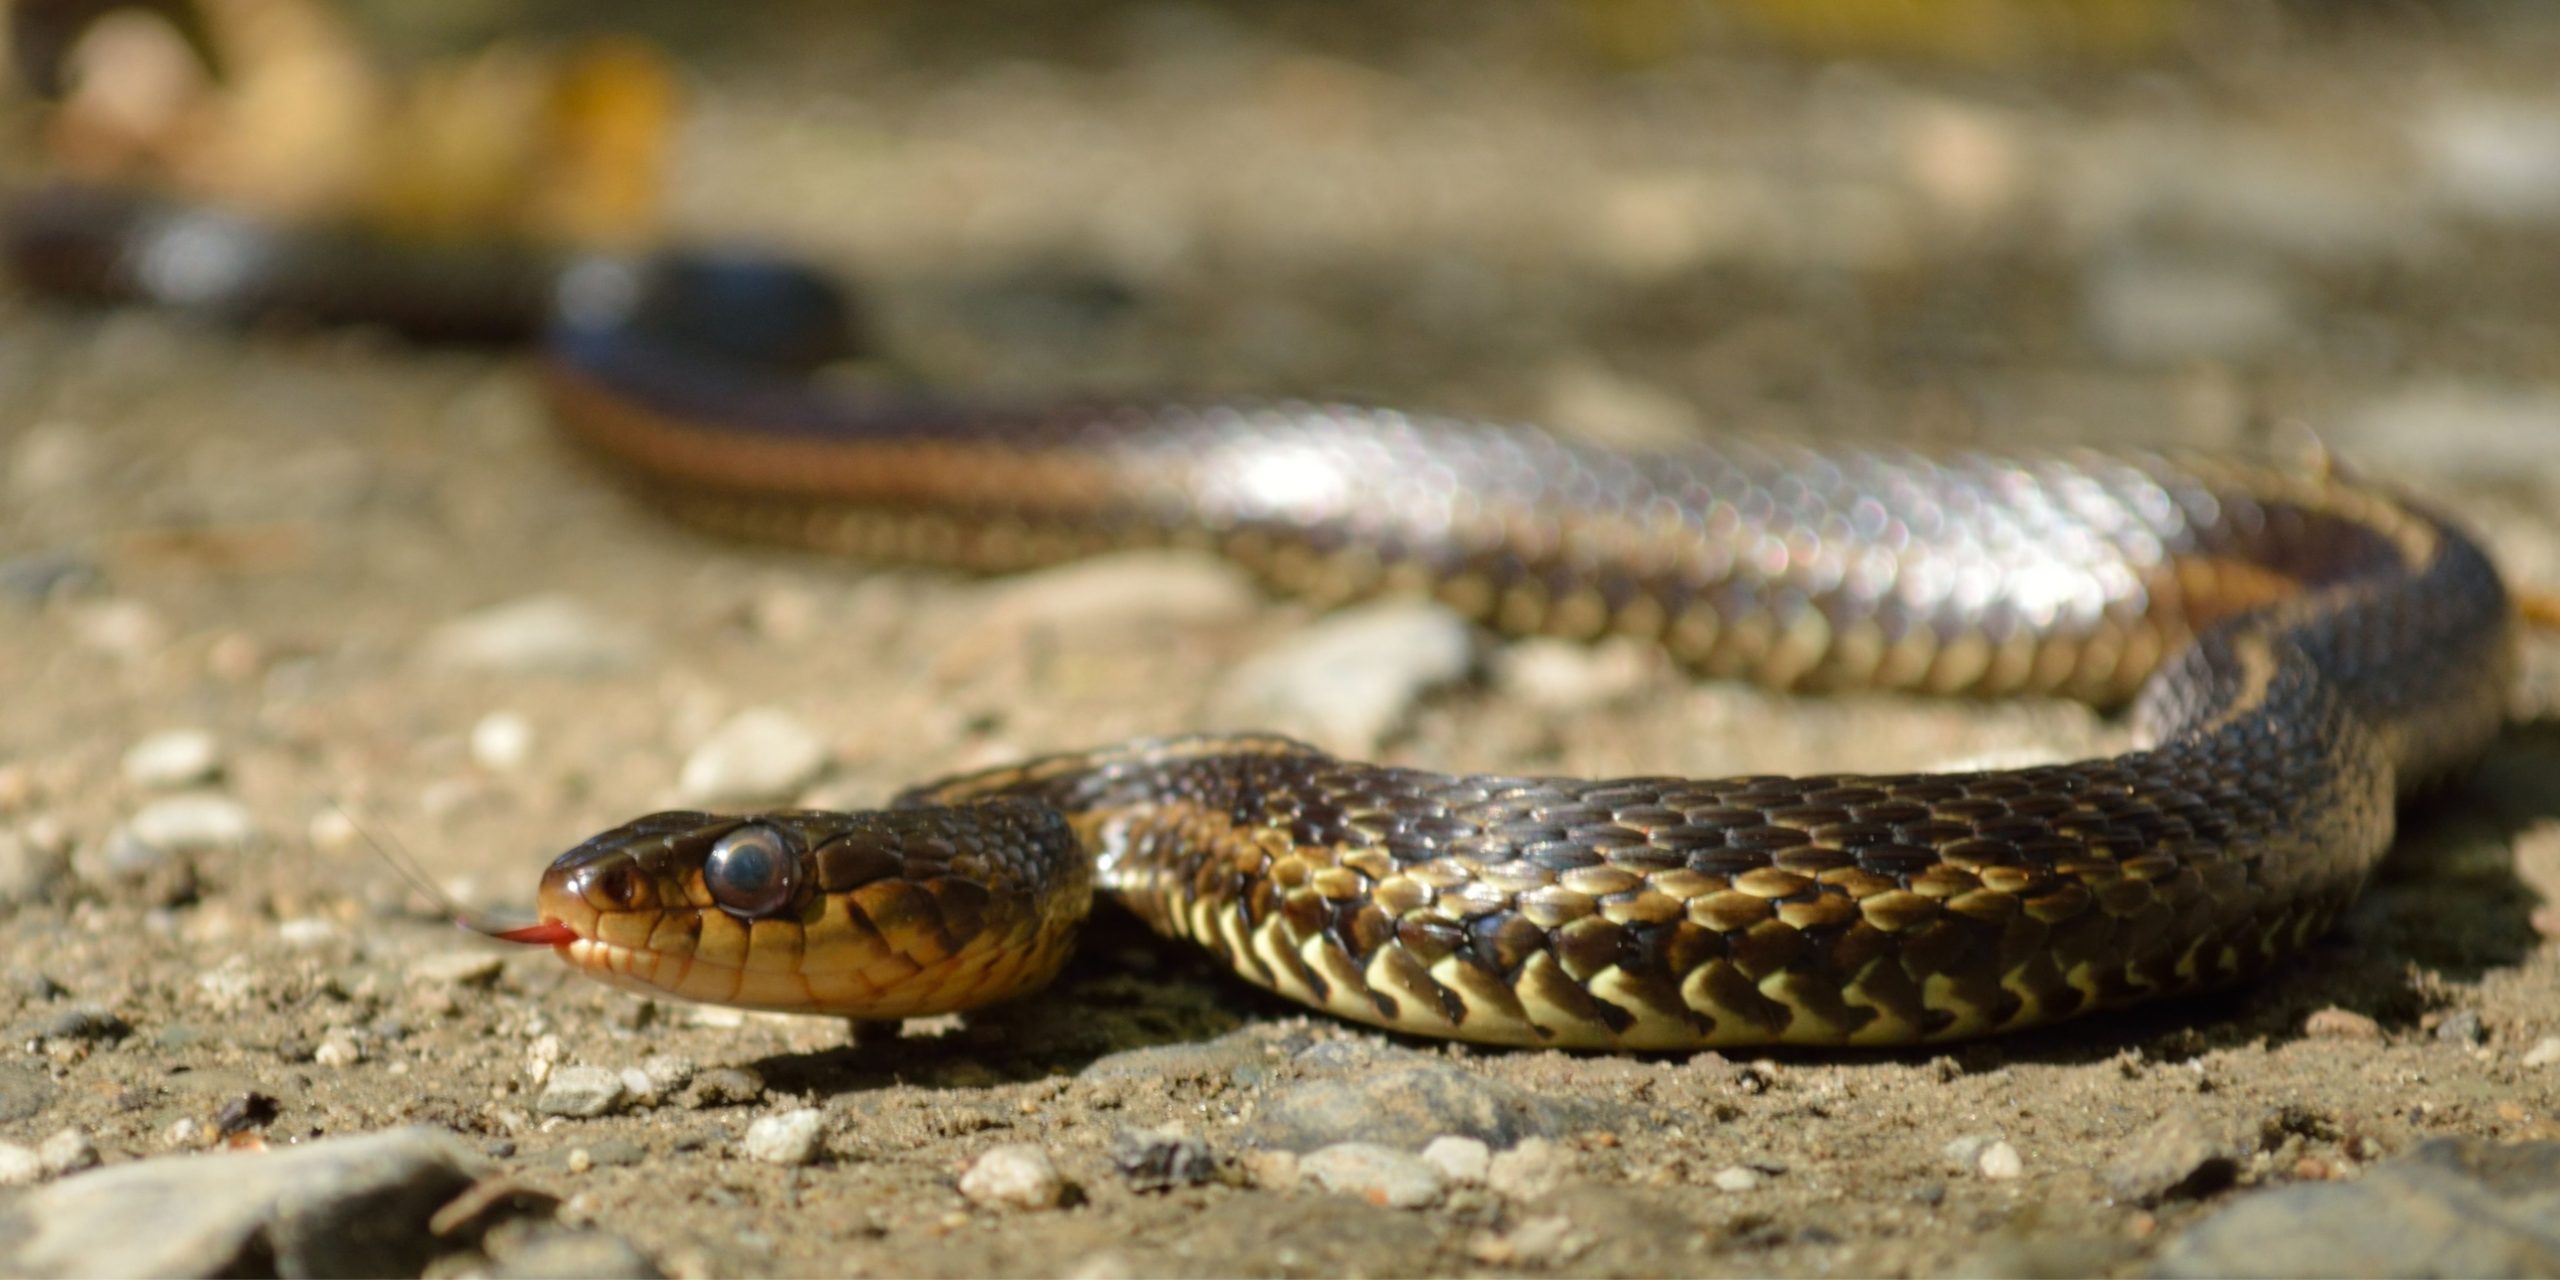 Meet The San Francisco Garter Snake Online Flows To Bay